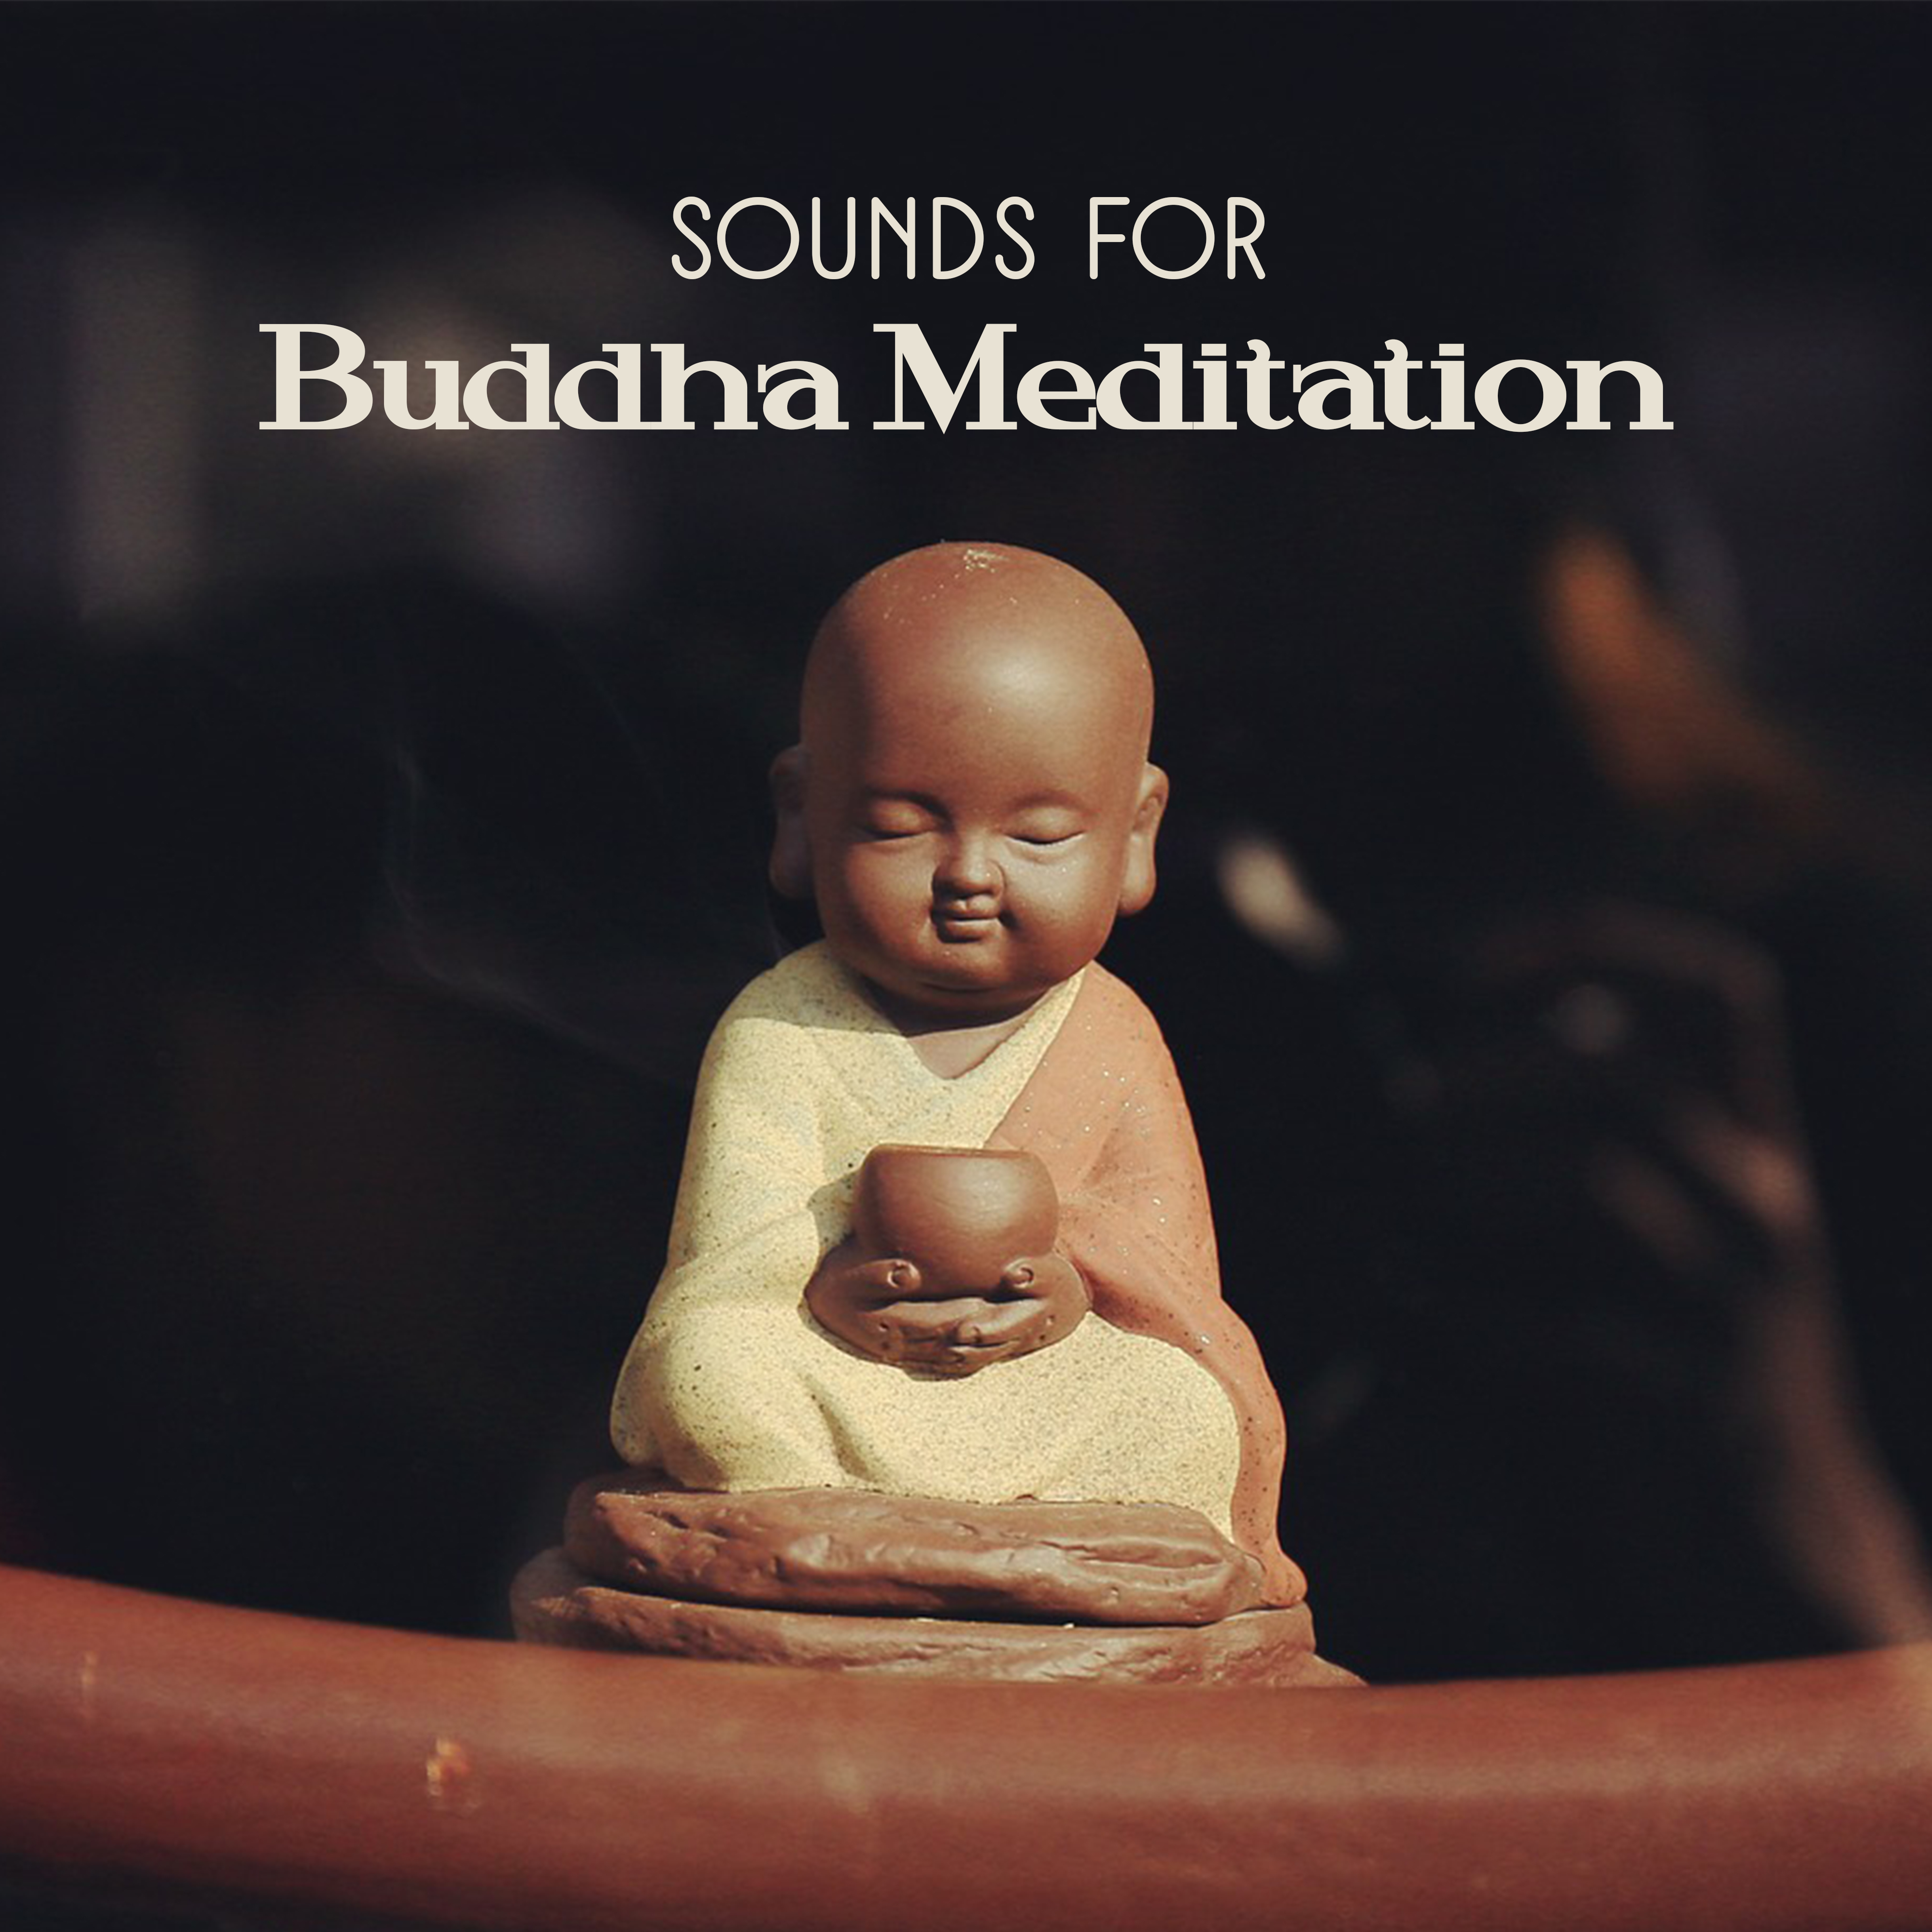 Sounds for Buddha Meditation